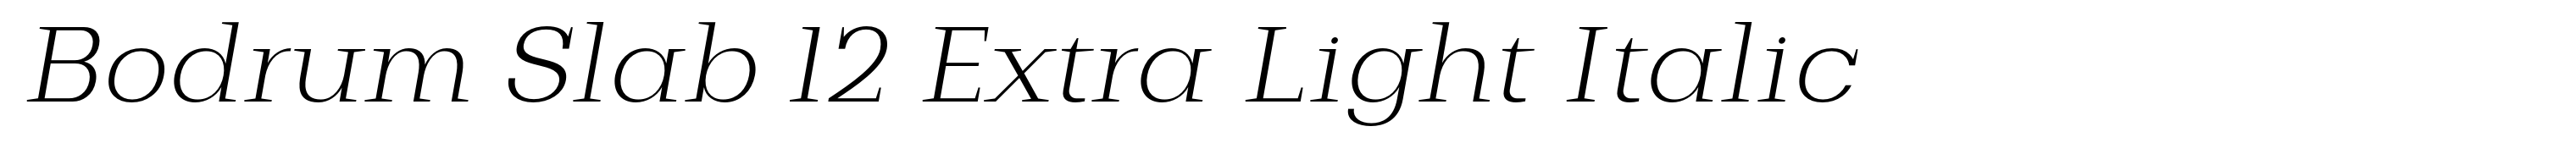 Bodrum Slab 12 Extra Light Italic